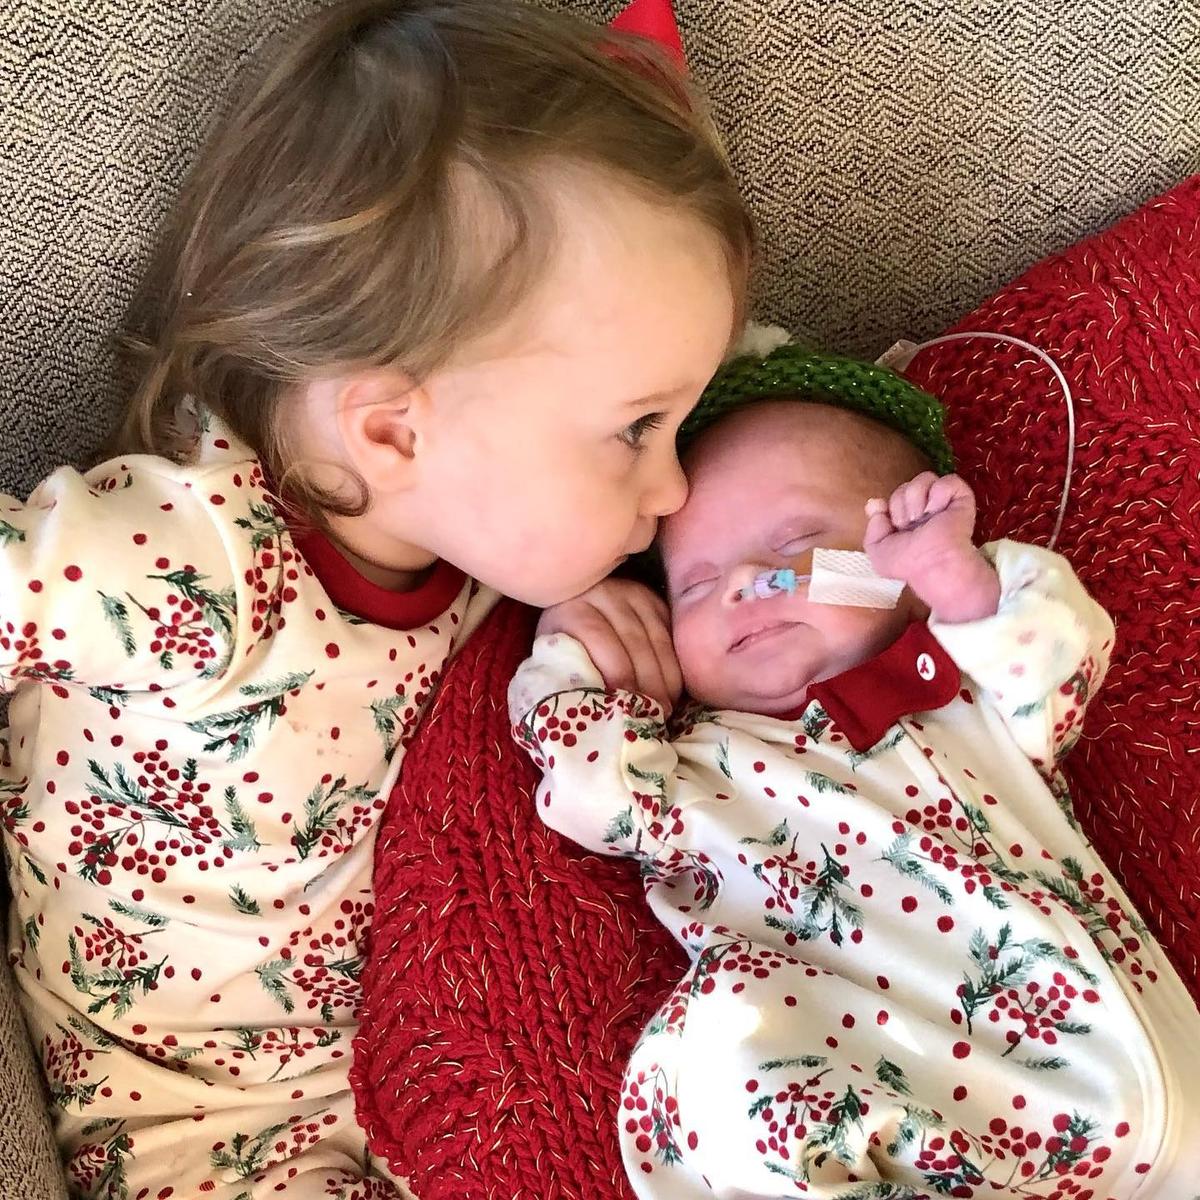 Georgi with her baby sister, Millie. (Courtesy of <a href="https://www.instagram.com/makingmilliestones/">Nikki Geib</a>)